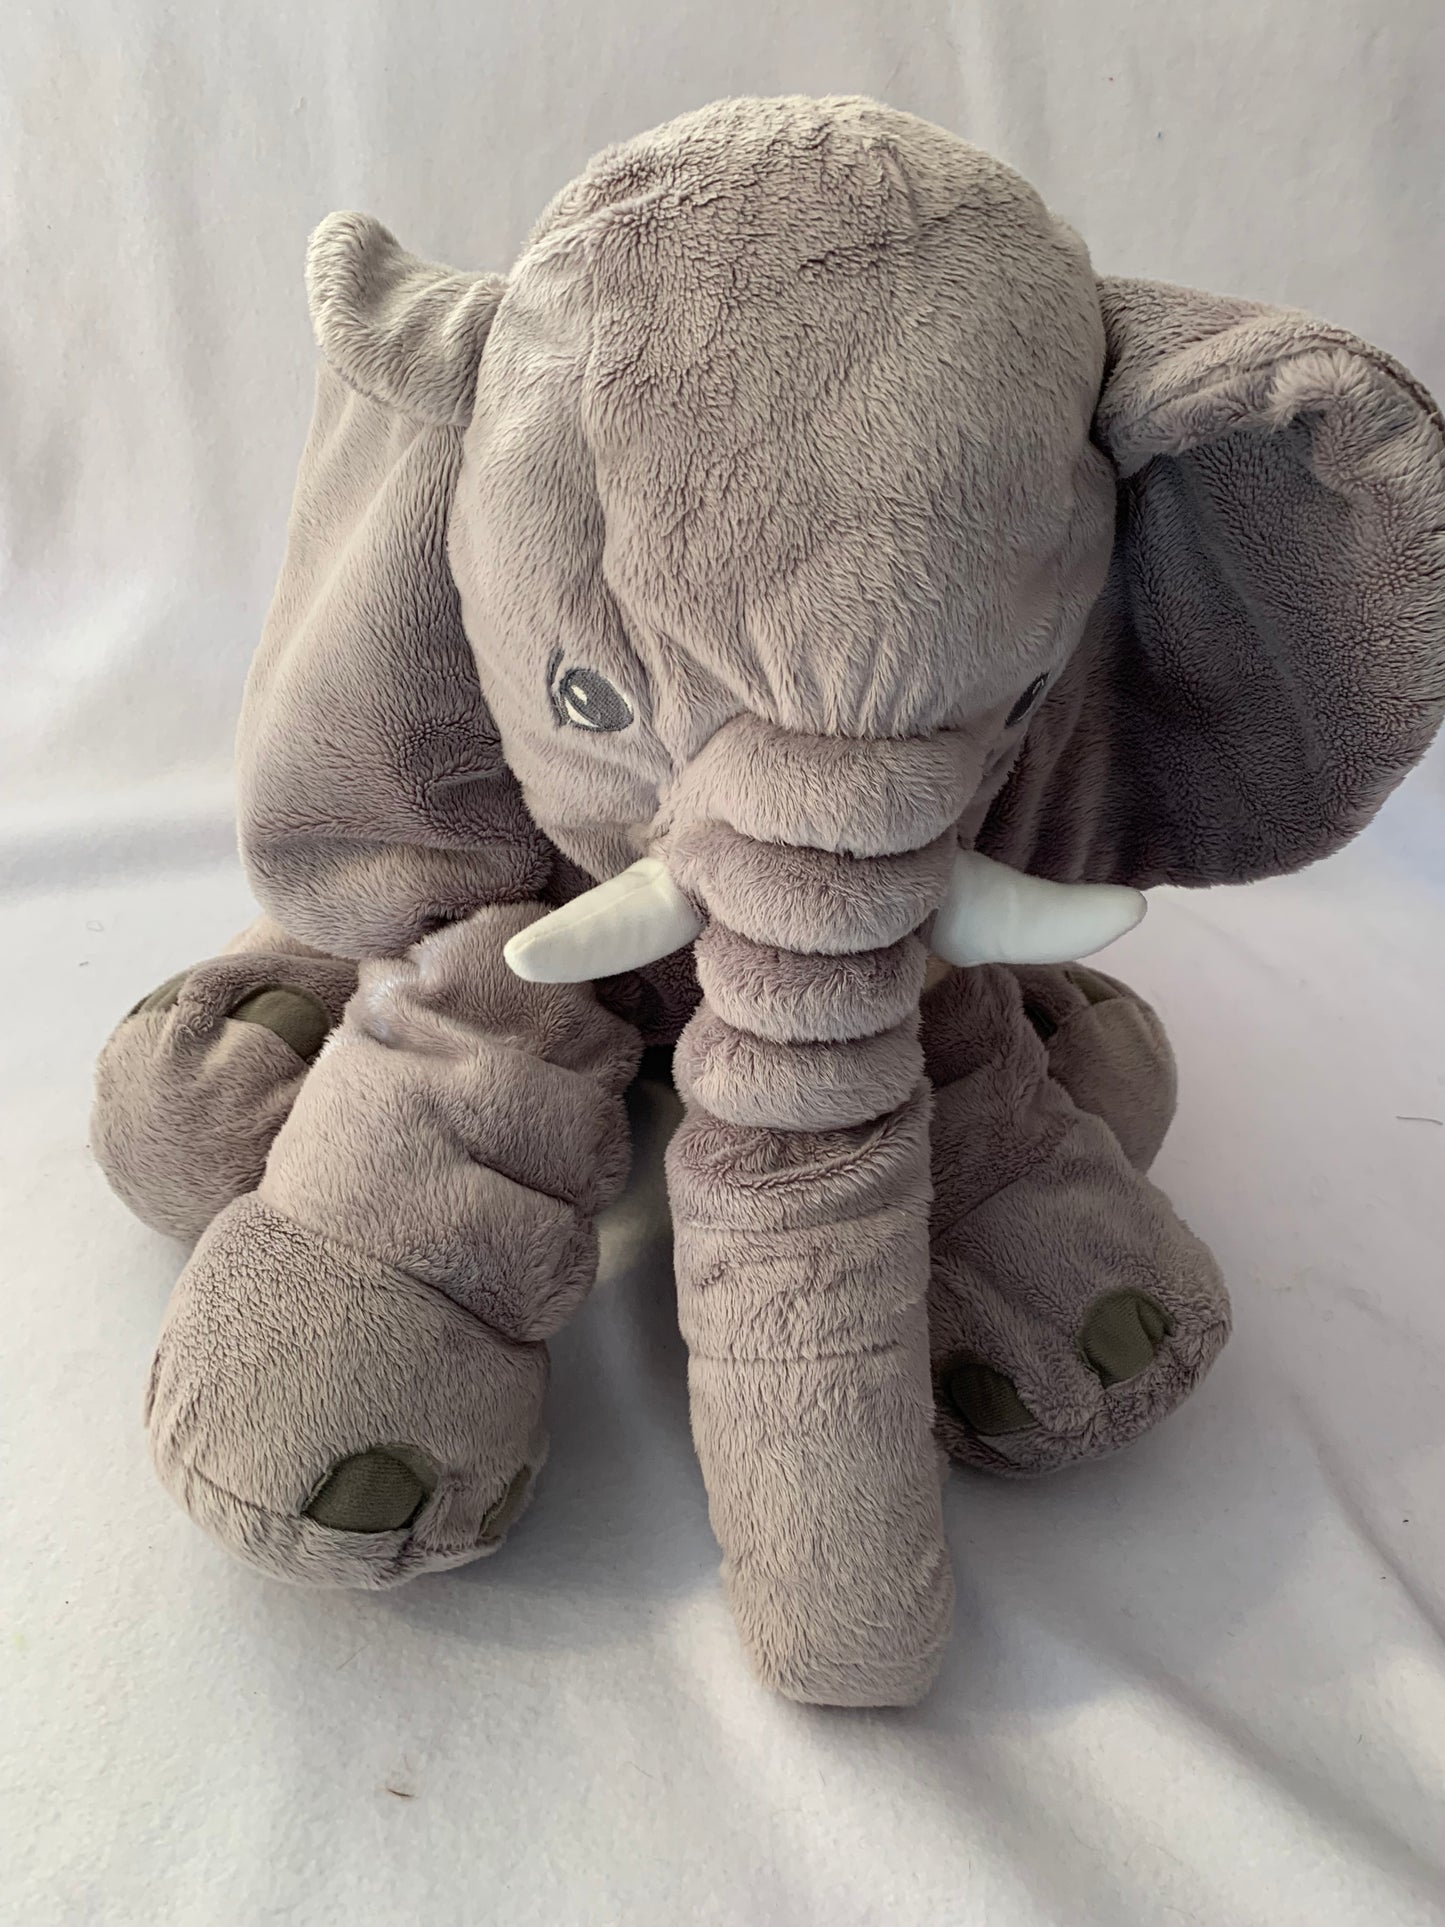 Jumbo WEIGHTED STUFFED ANIMAL, large elephant or dog sensory toy, choose 15 or 20 lbs, washable